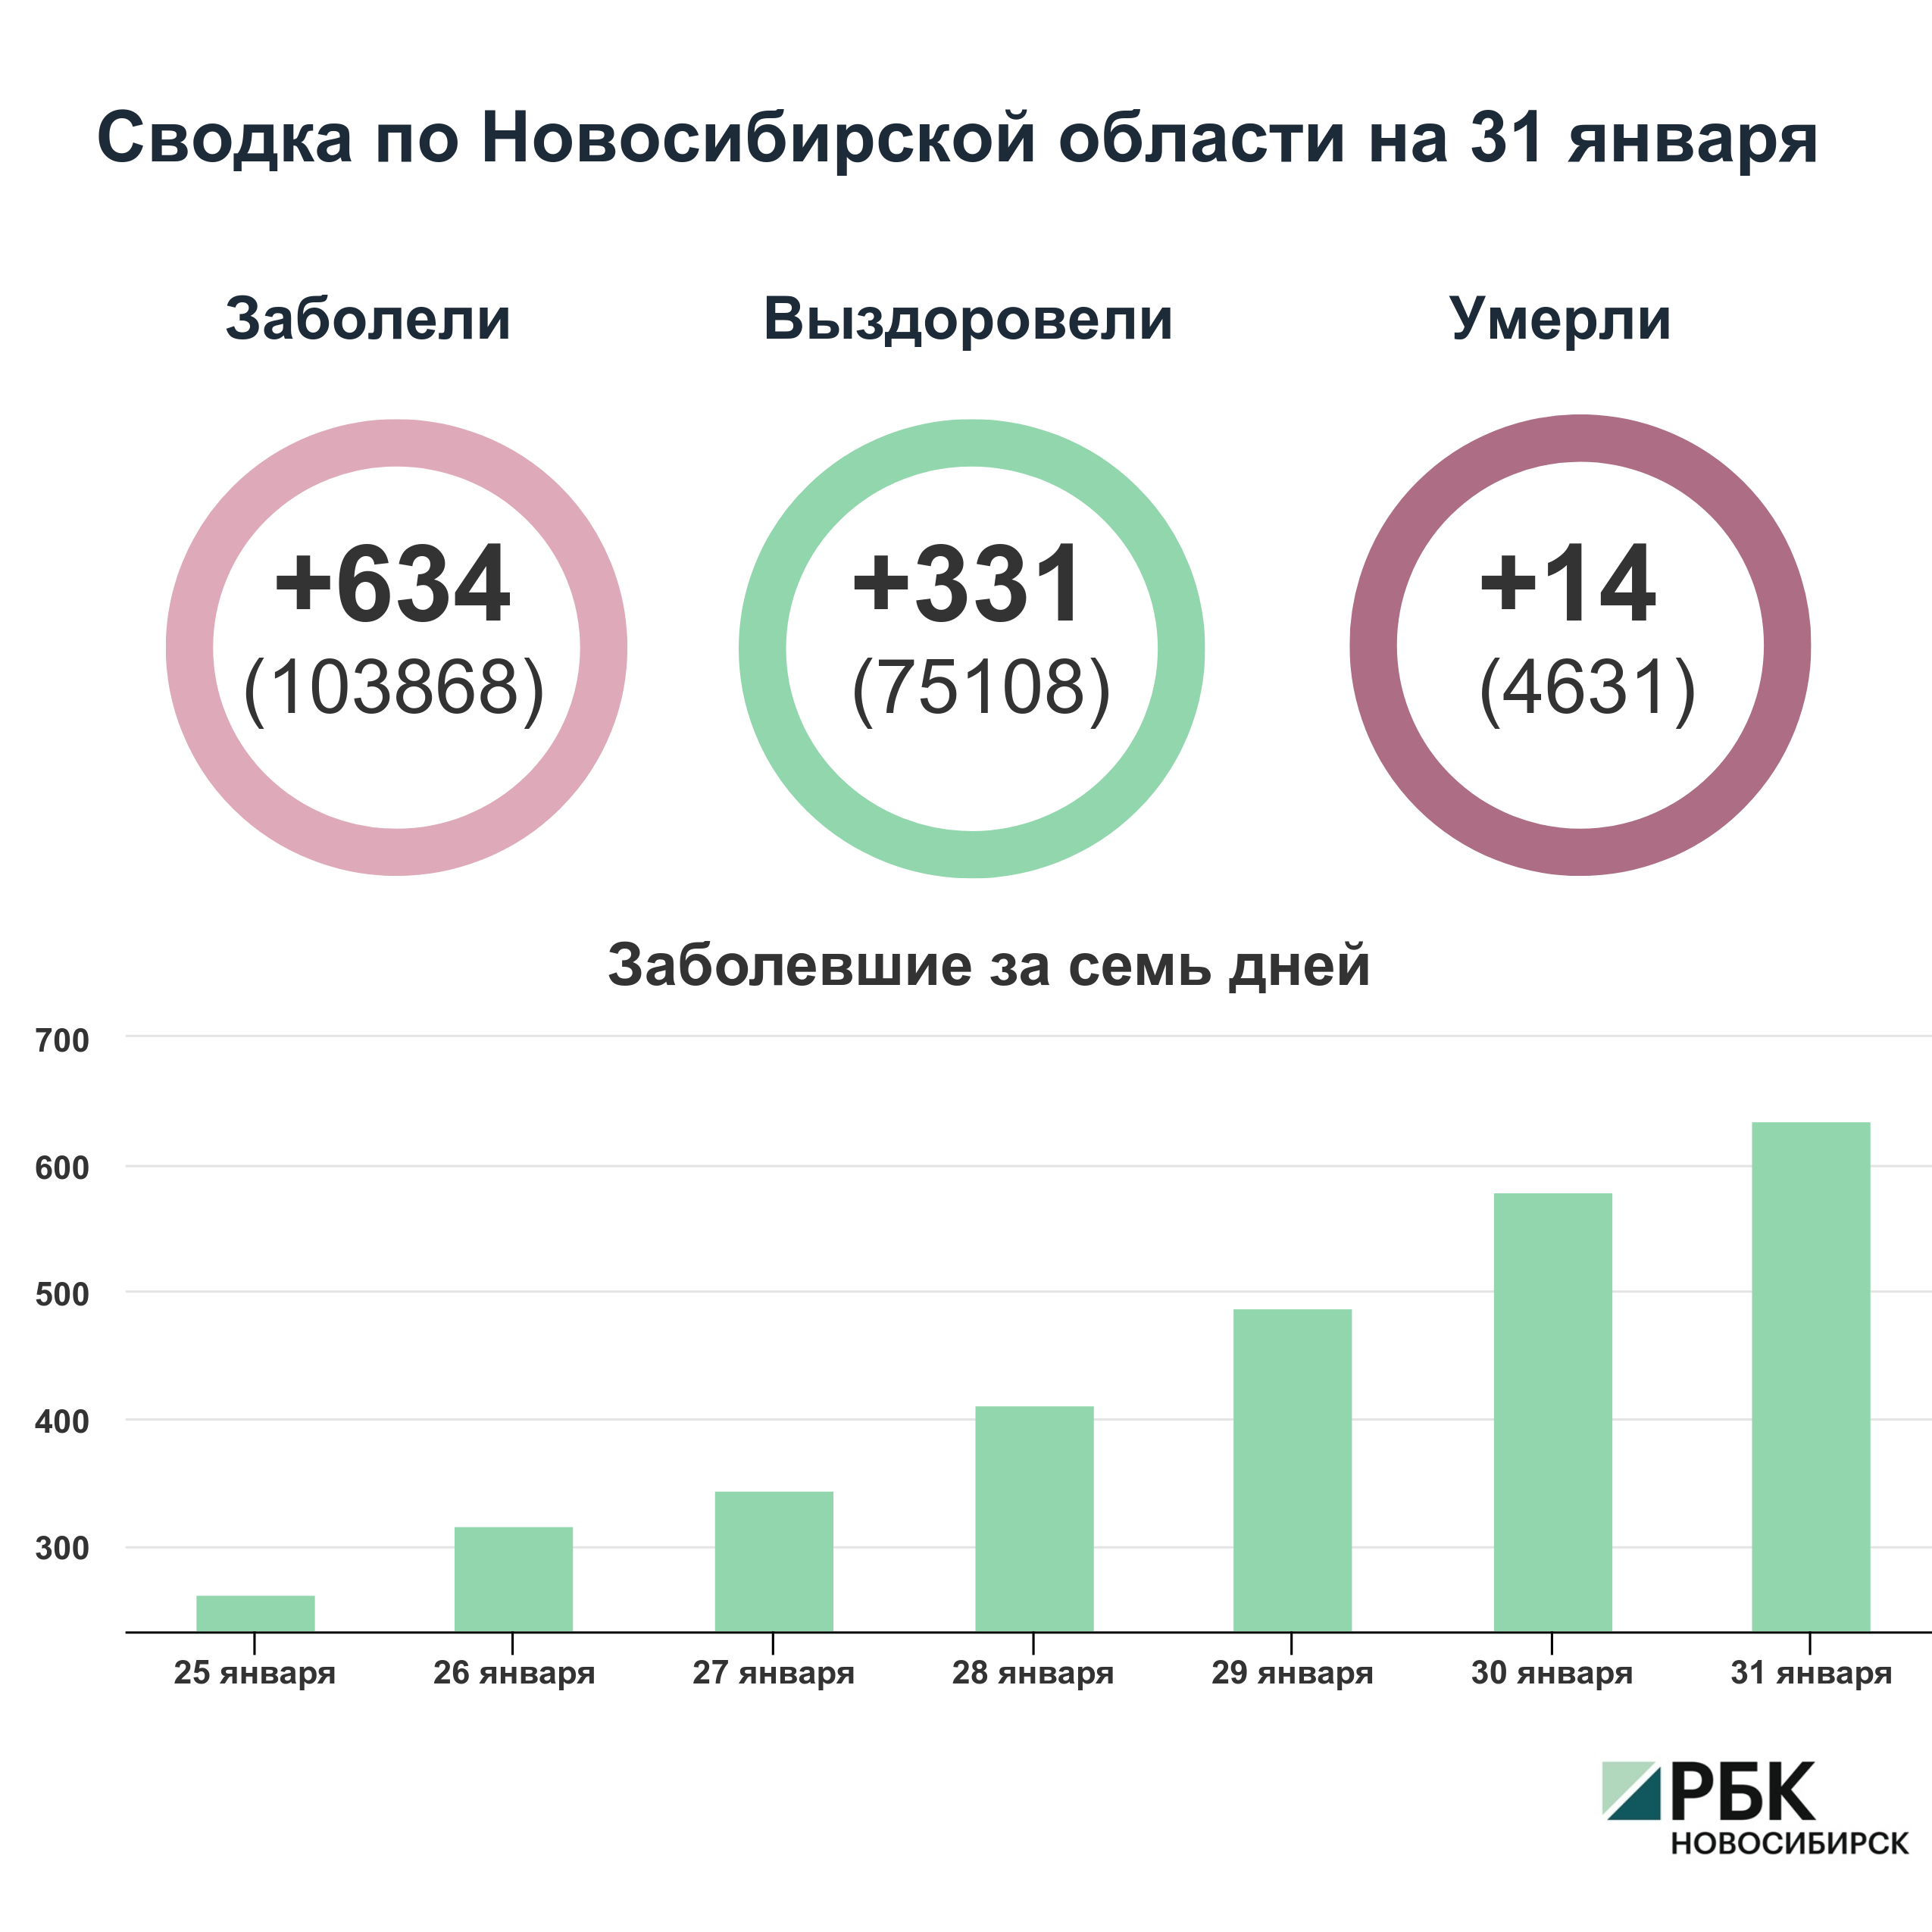 Коронавирус в Новосибирске: сводка на 31 января